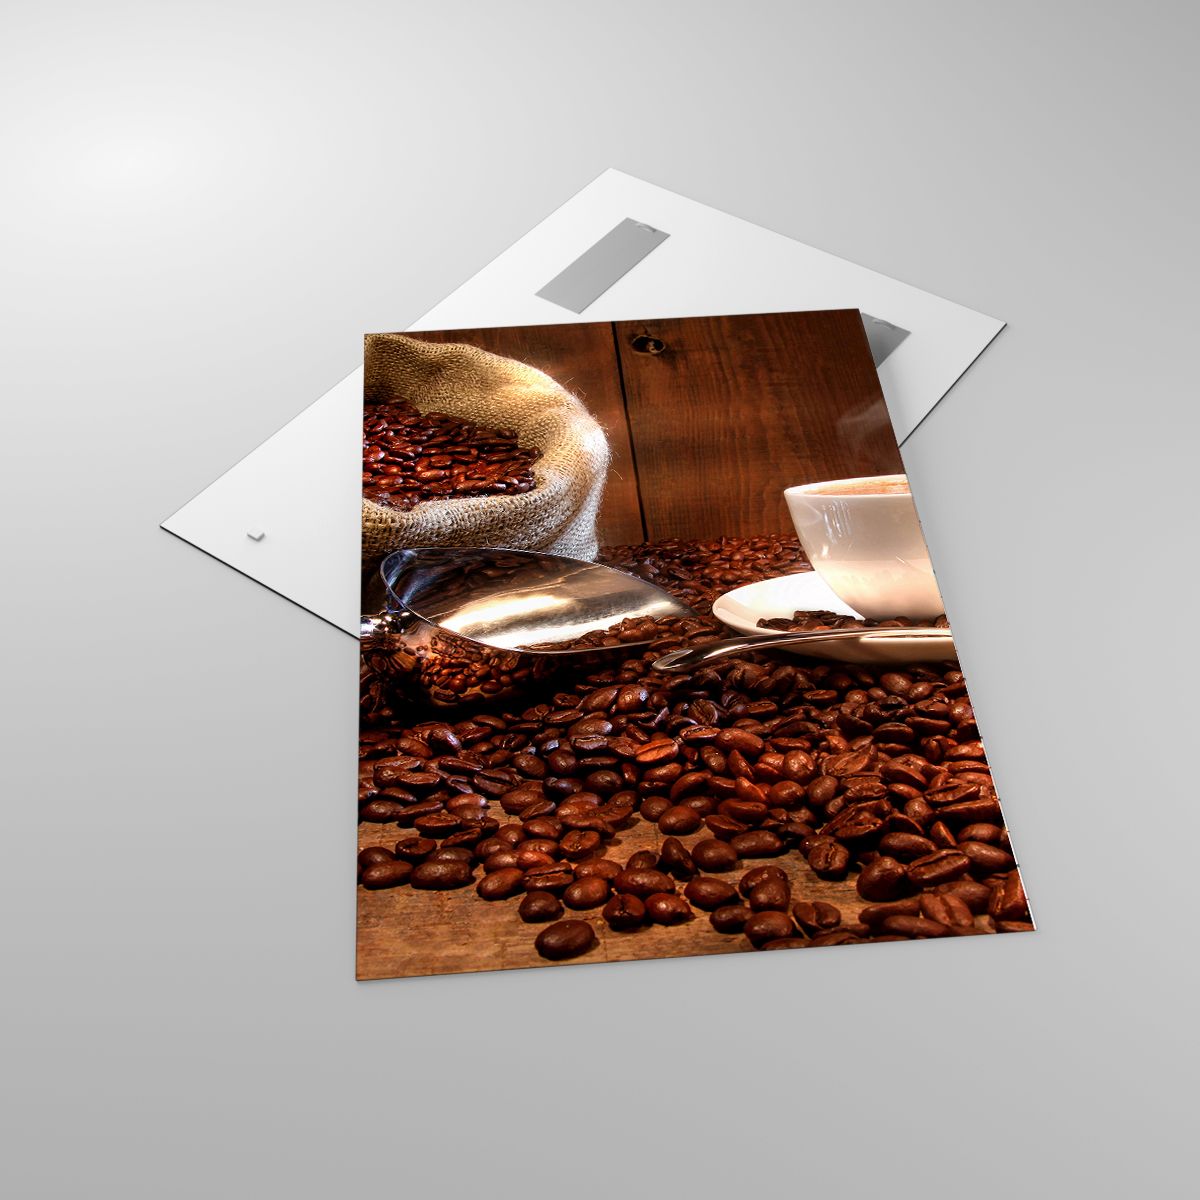 Glasbild Kaffeebohnen, Glasbild Aroma, Glasbild Gastronomie, Glasbild Tasse, Glasbild Brasilien